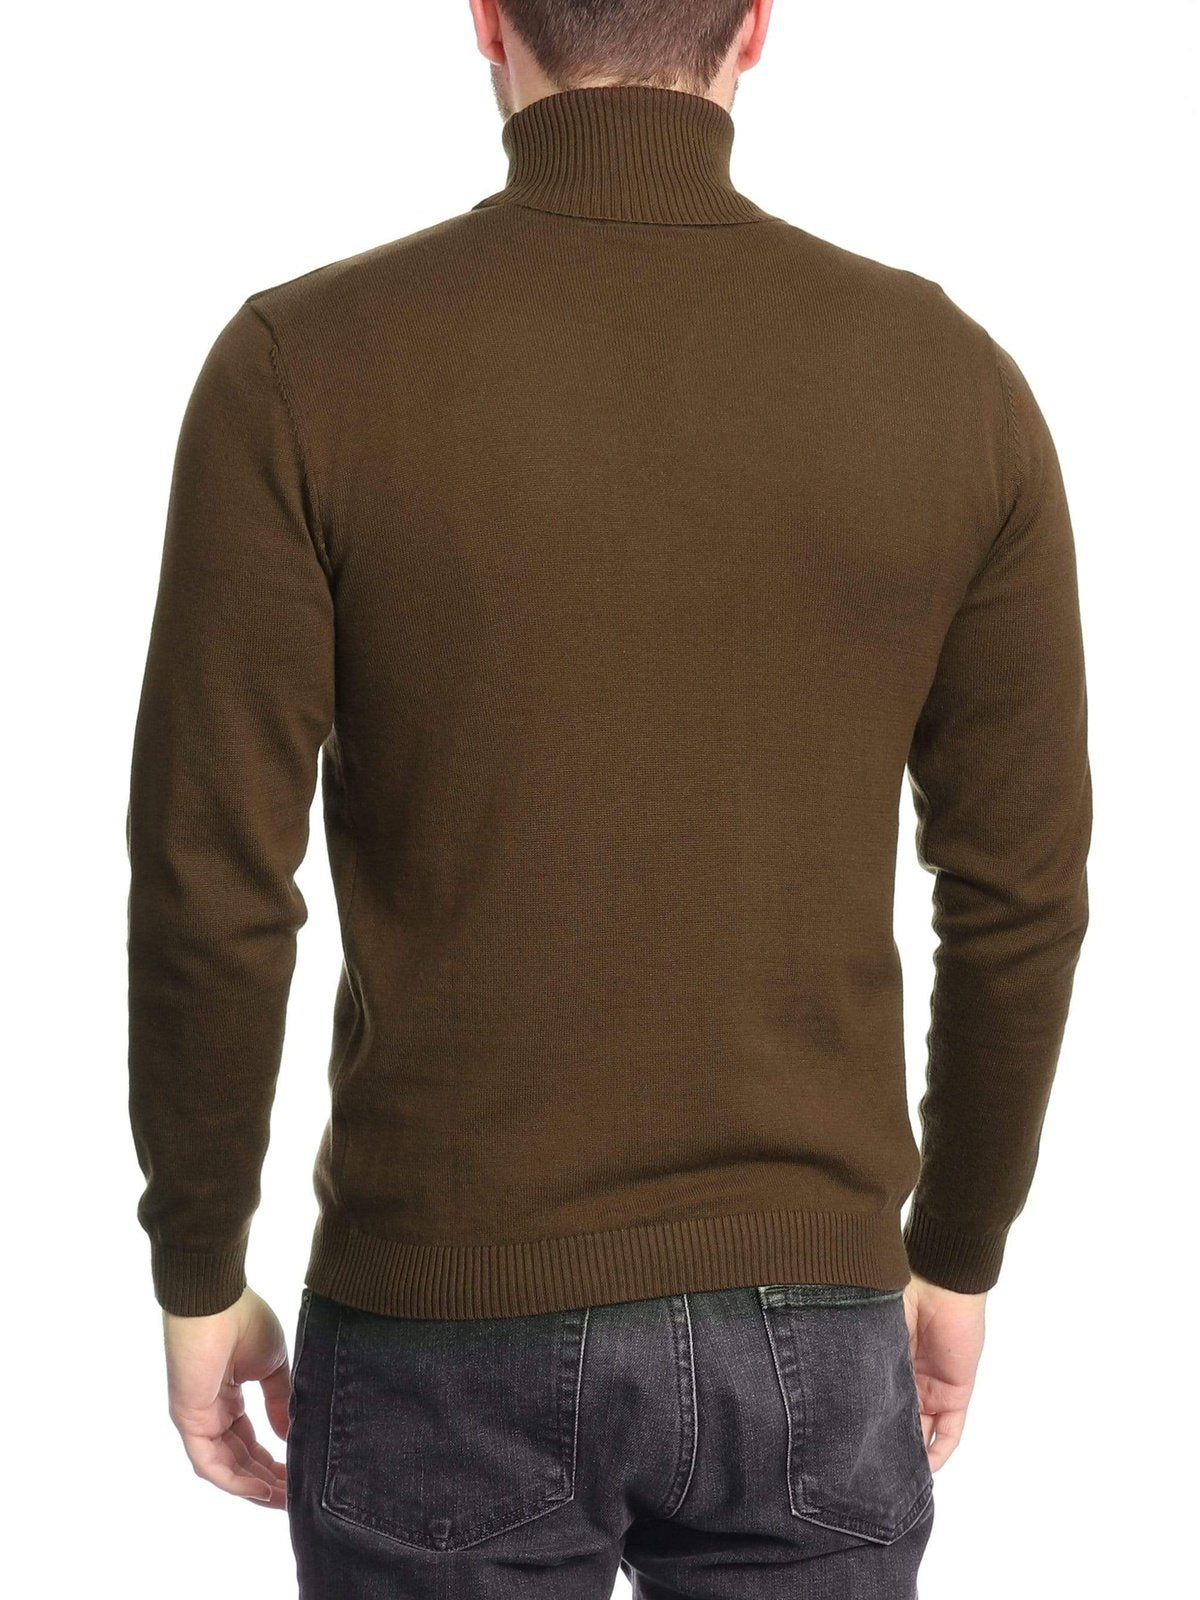 Arthur Black Default Category Migrated Arthur Black Men's Solid Brown Pullover Cotton Blend Turtleneck Sweater Shirt